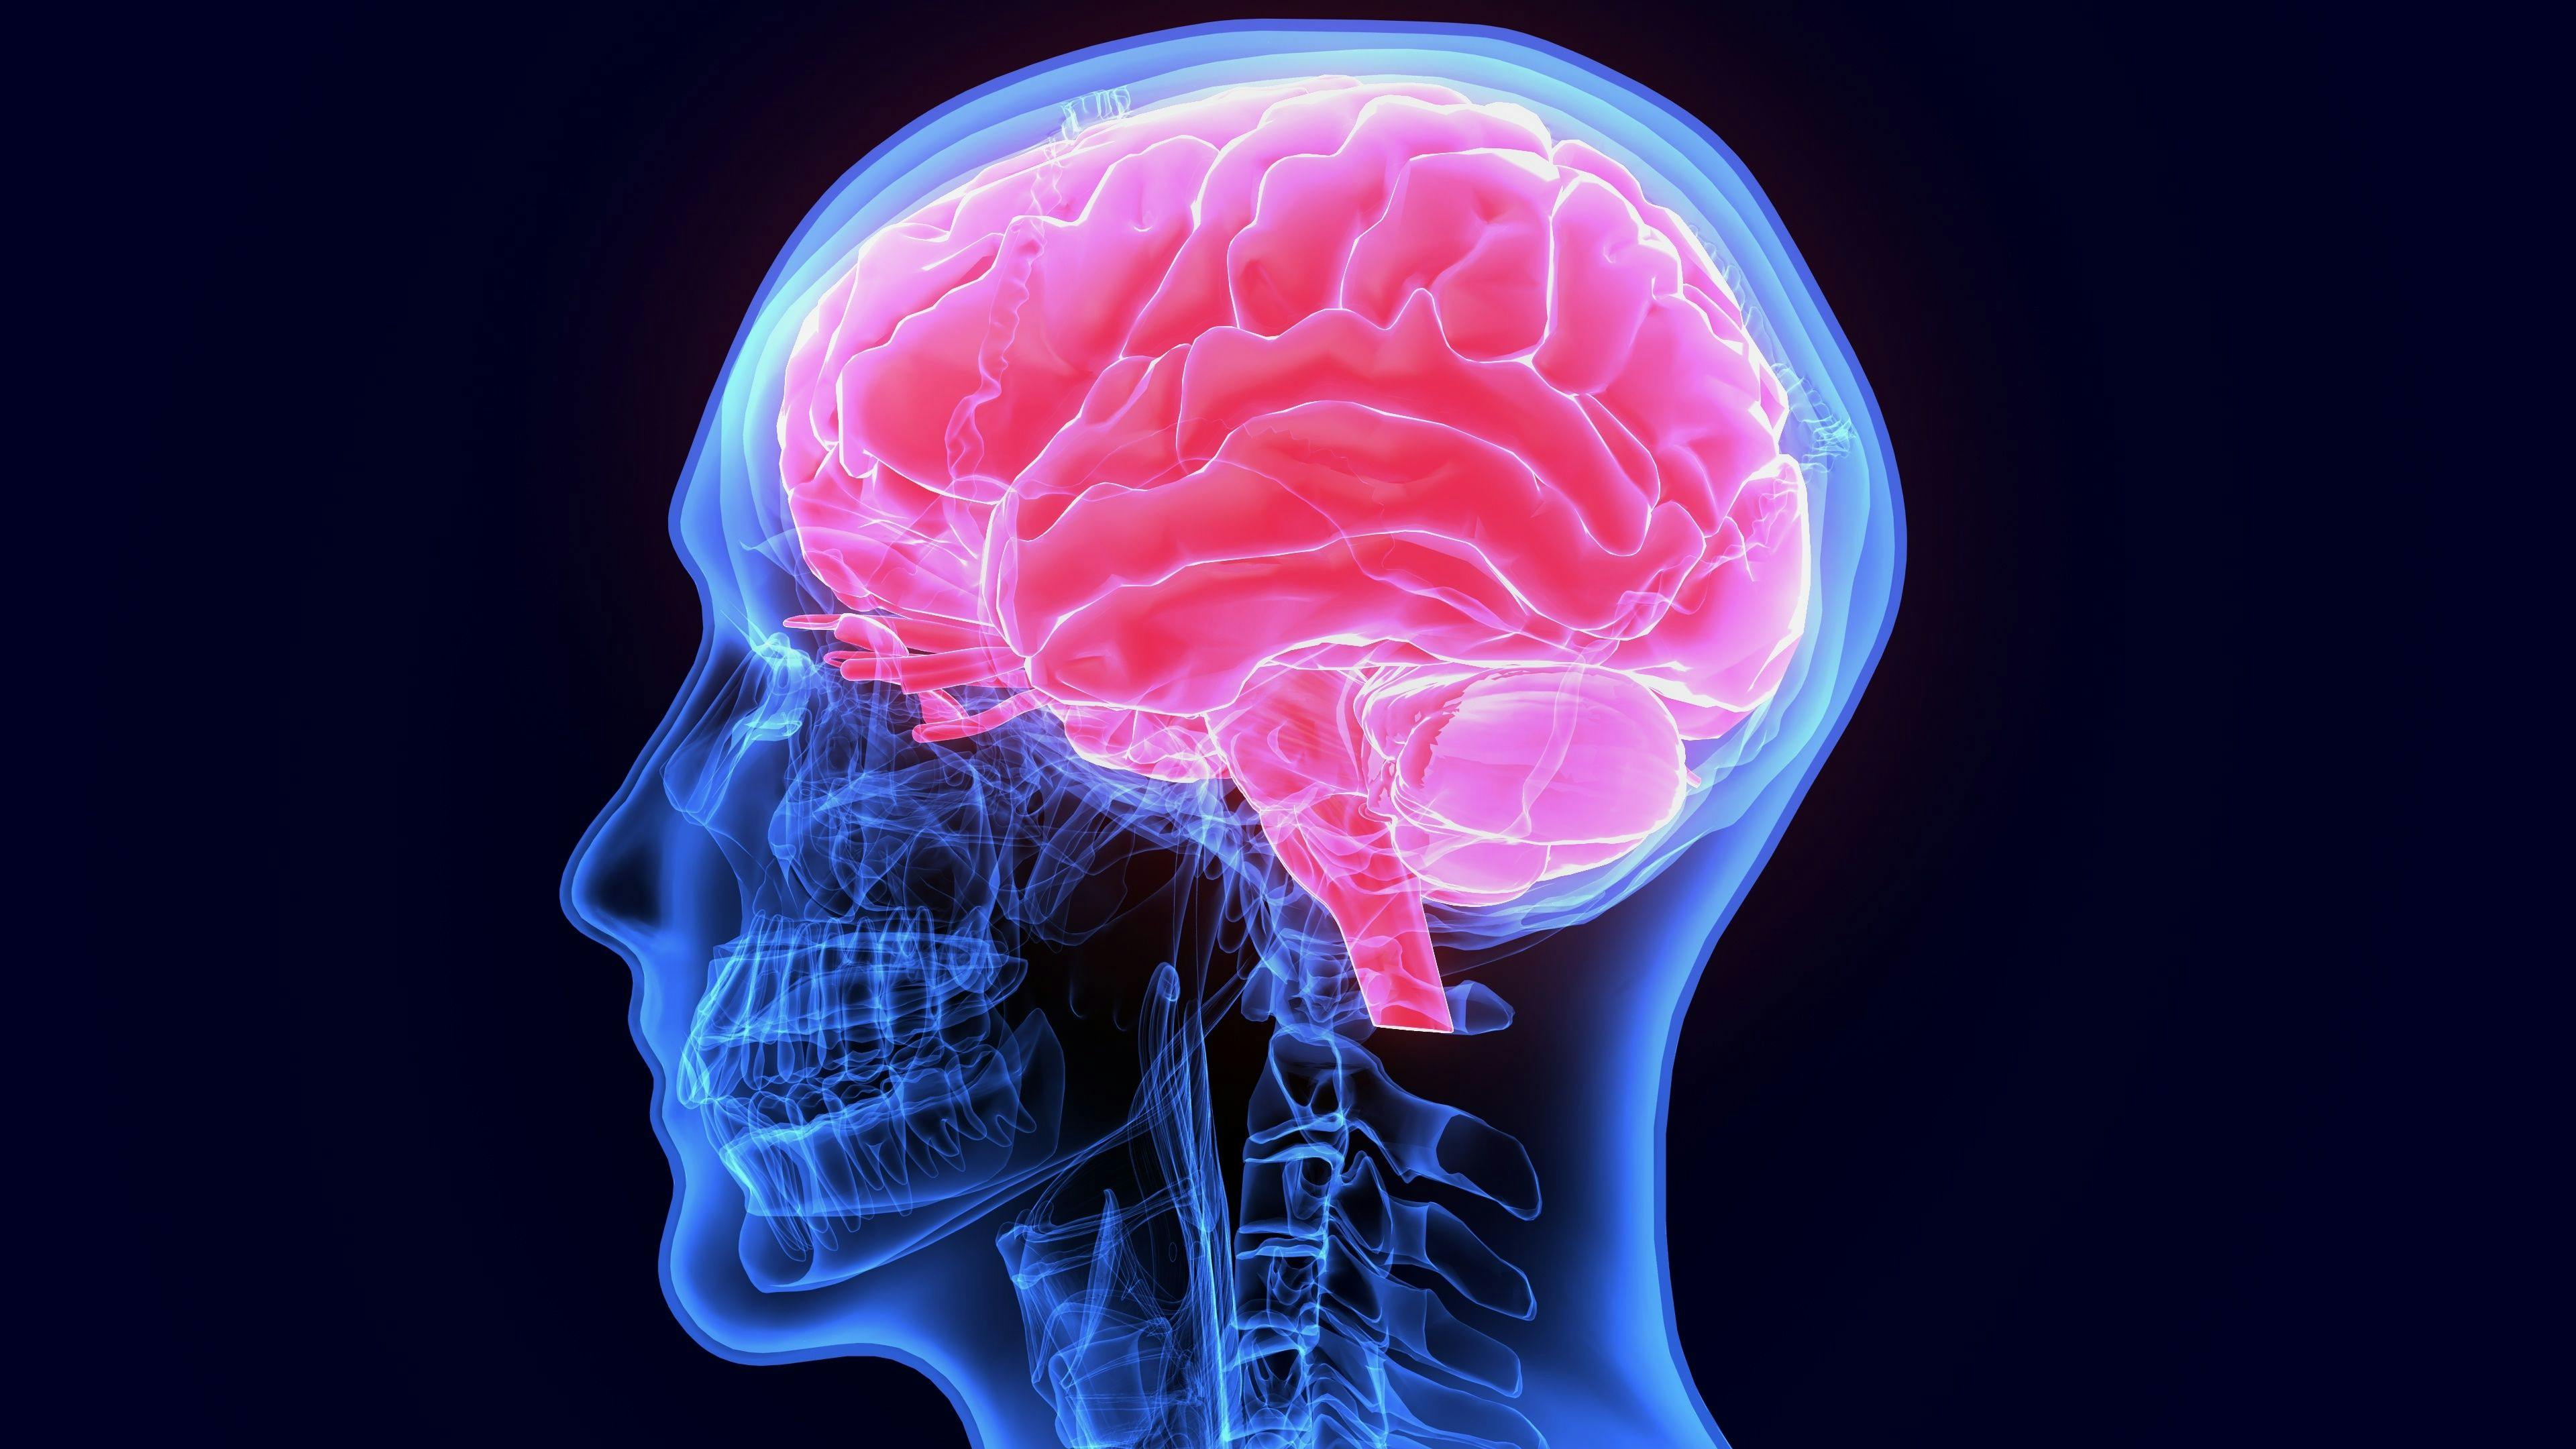 3d illustration of human body organ(brain anatomy) | Image credit: PIC4U - stock.adobe.com